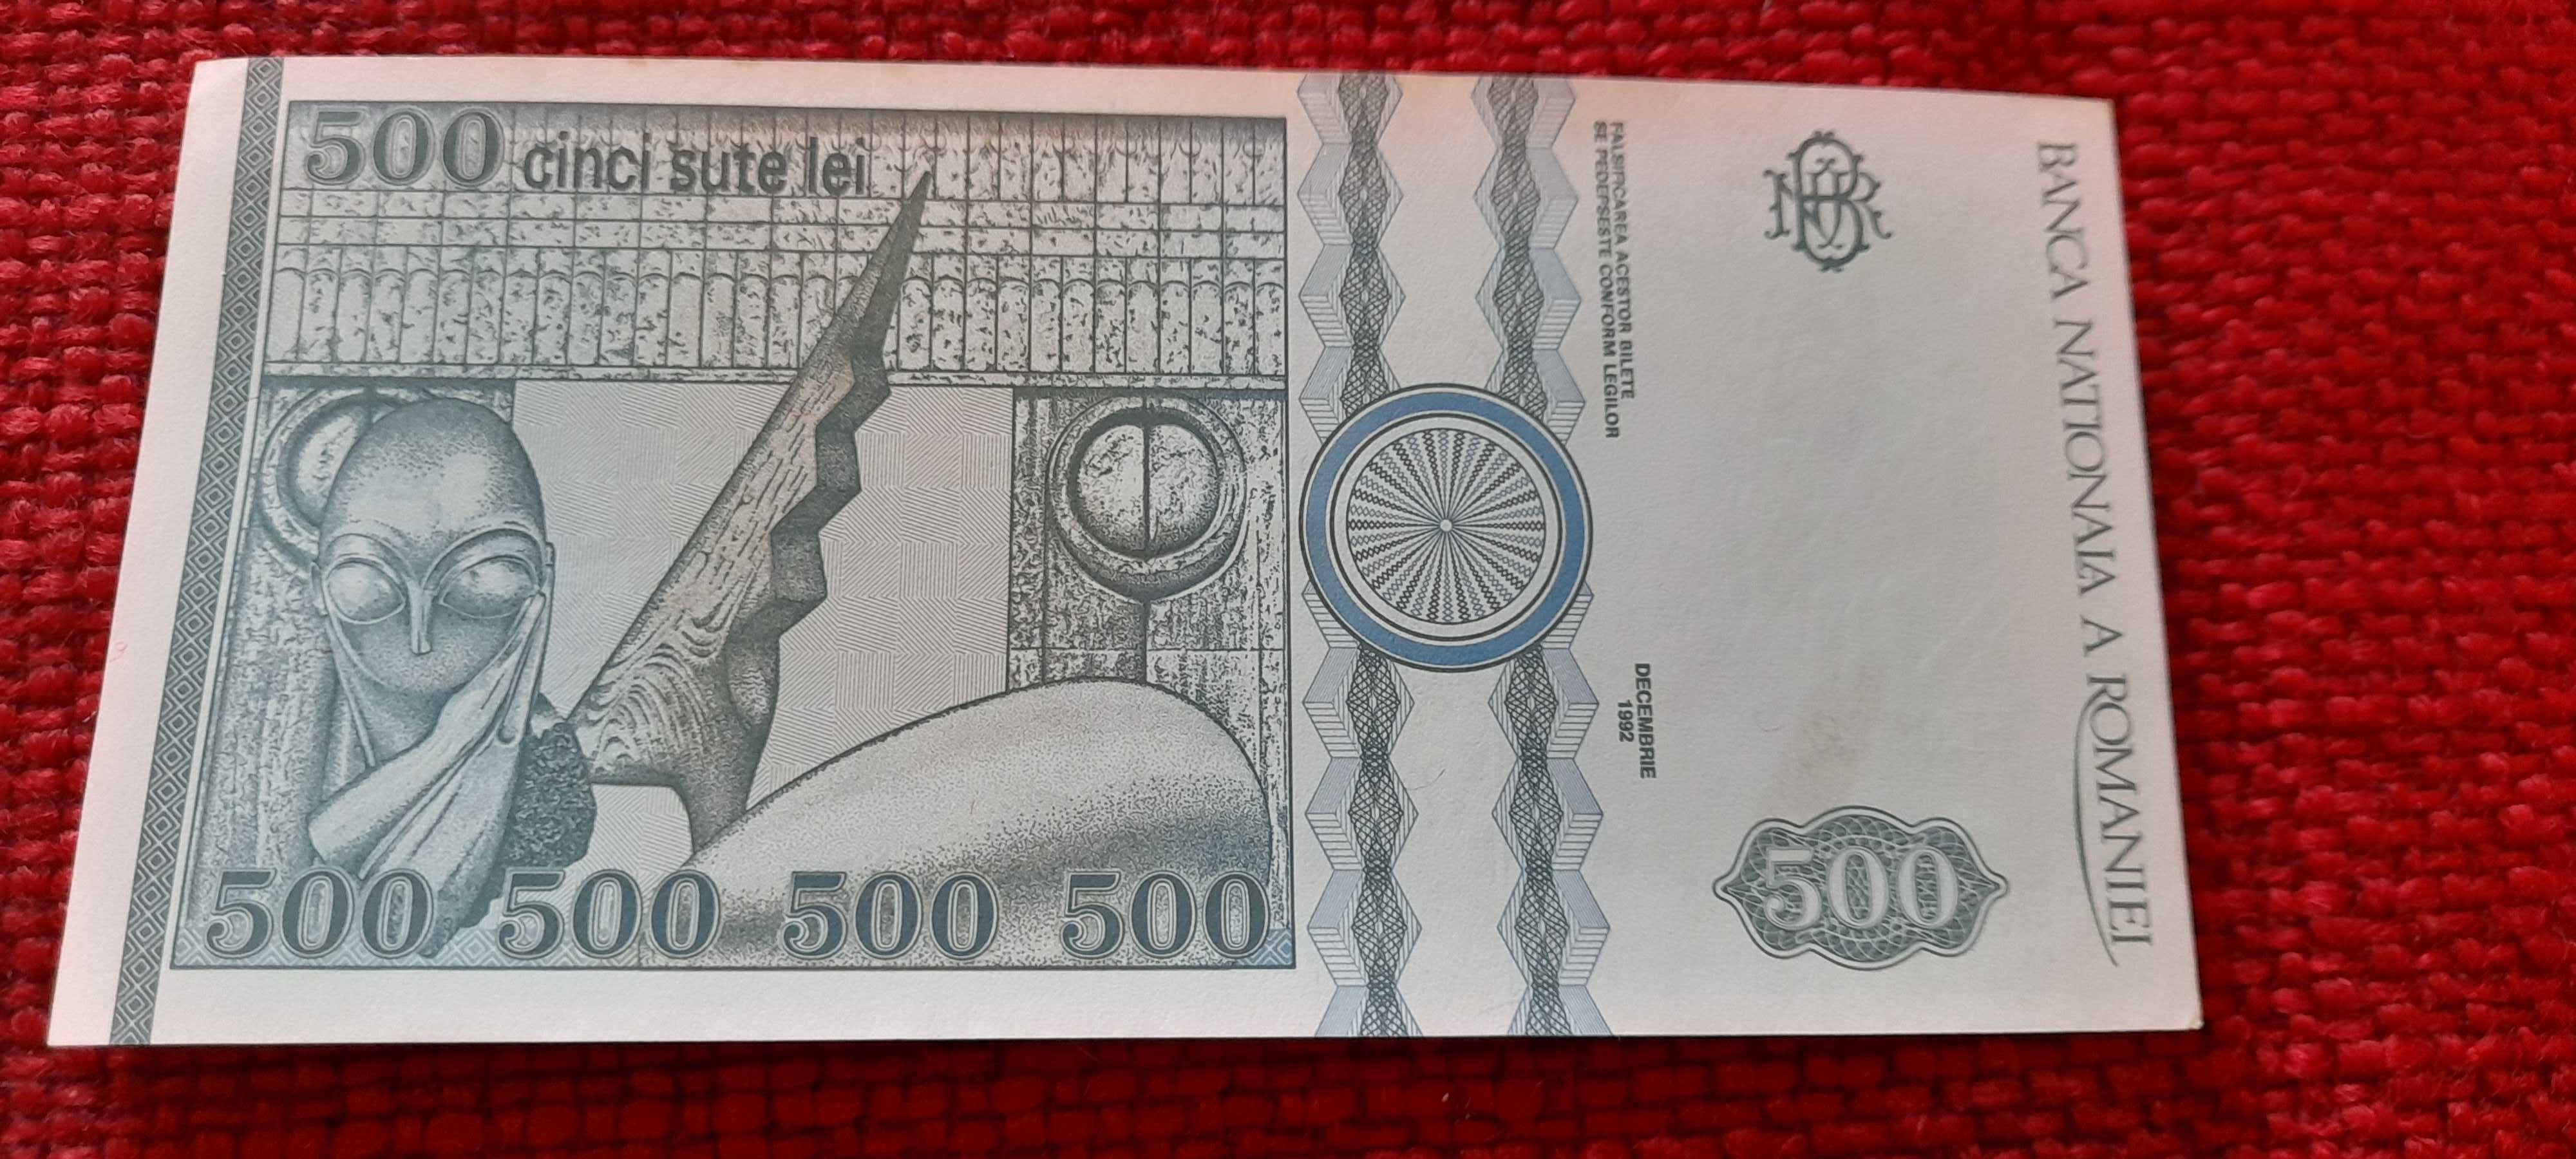 2 Bancnote 500 lei Constantin Brancusi